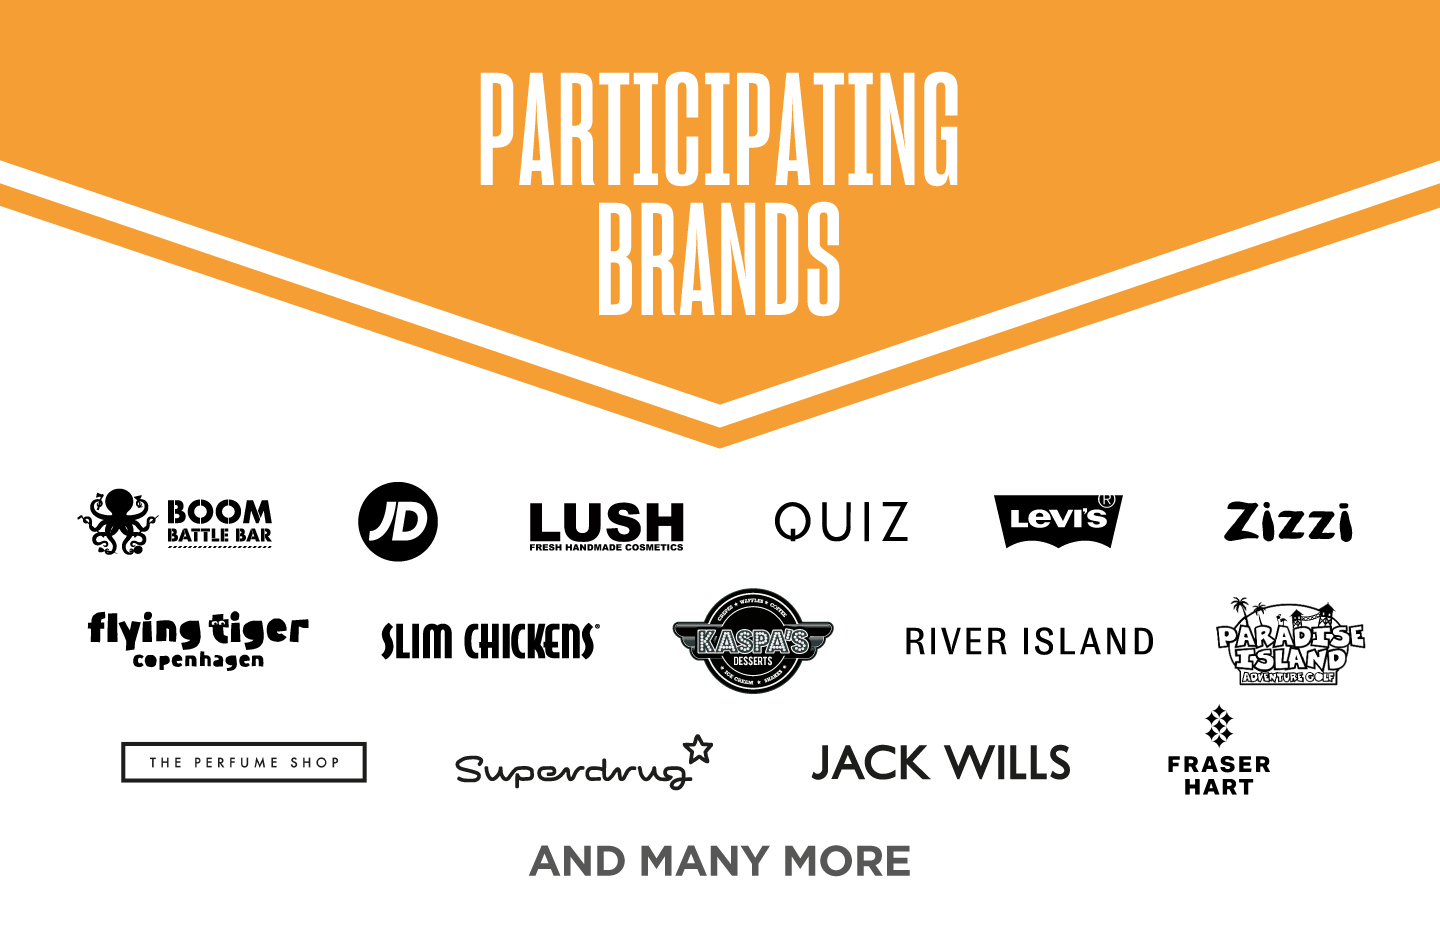 Participating brands logos